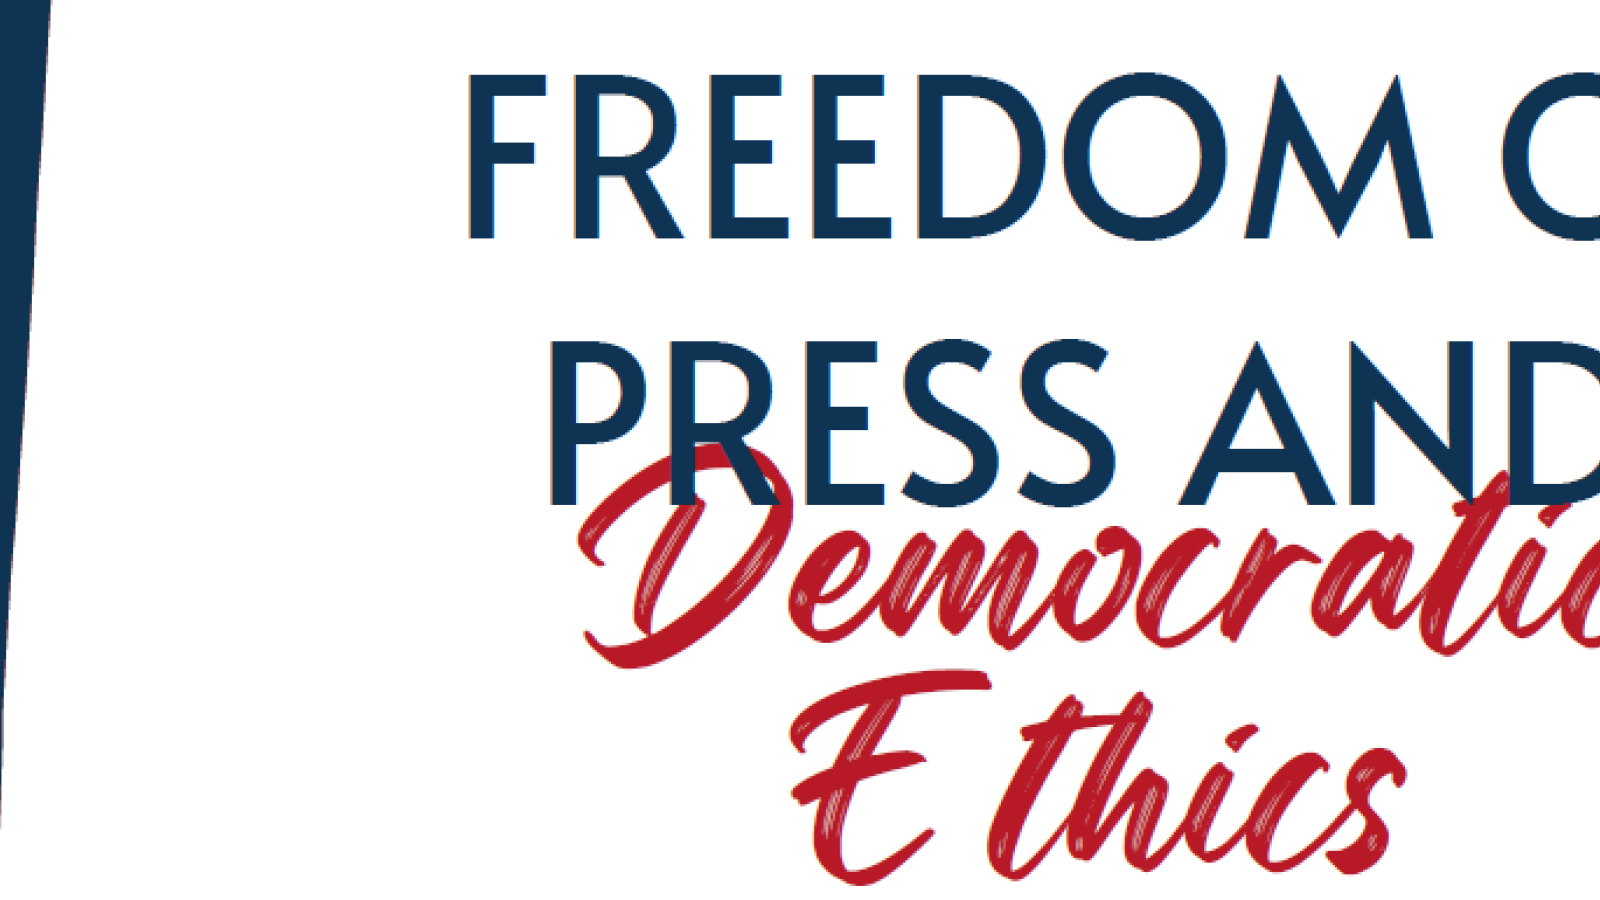 Freedom of Press and Democratic Ethics